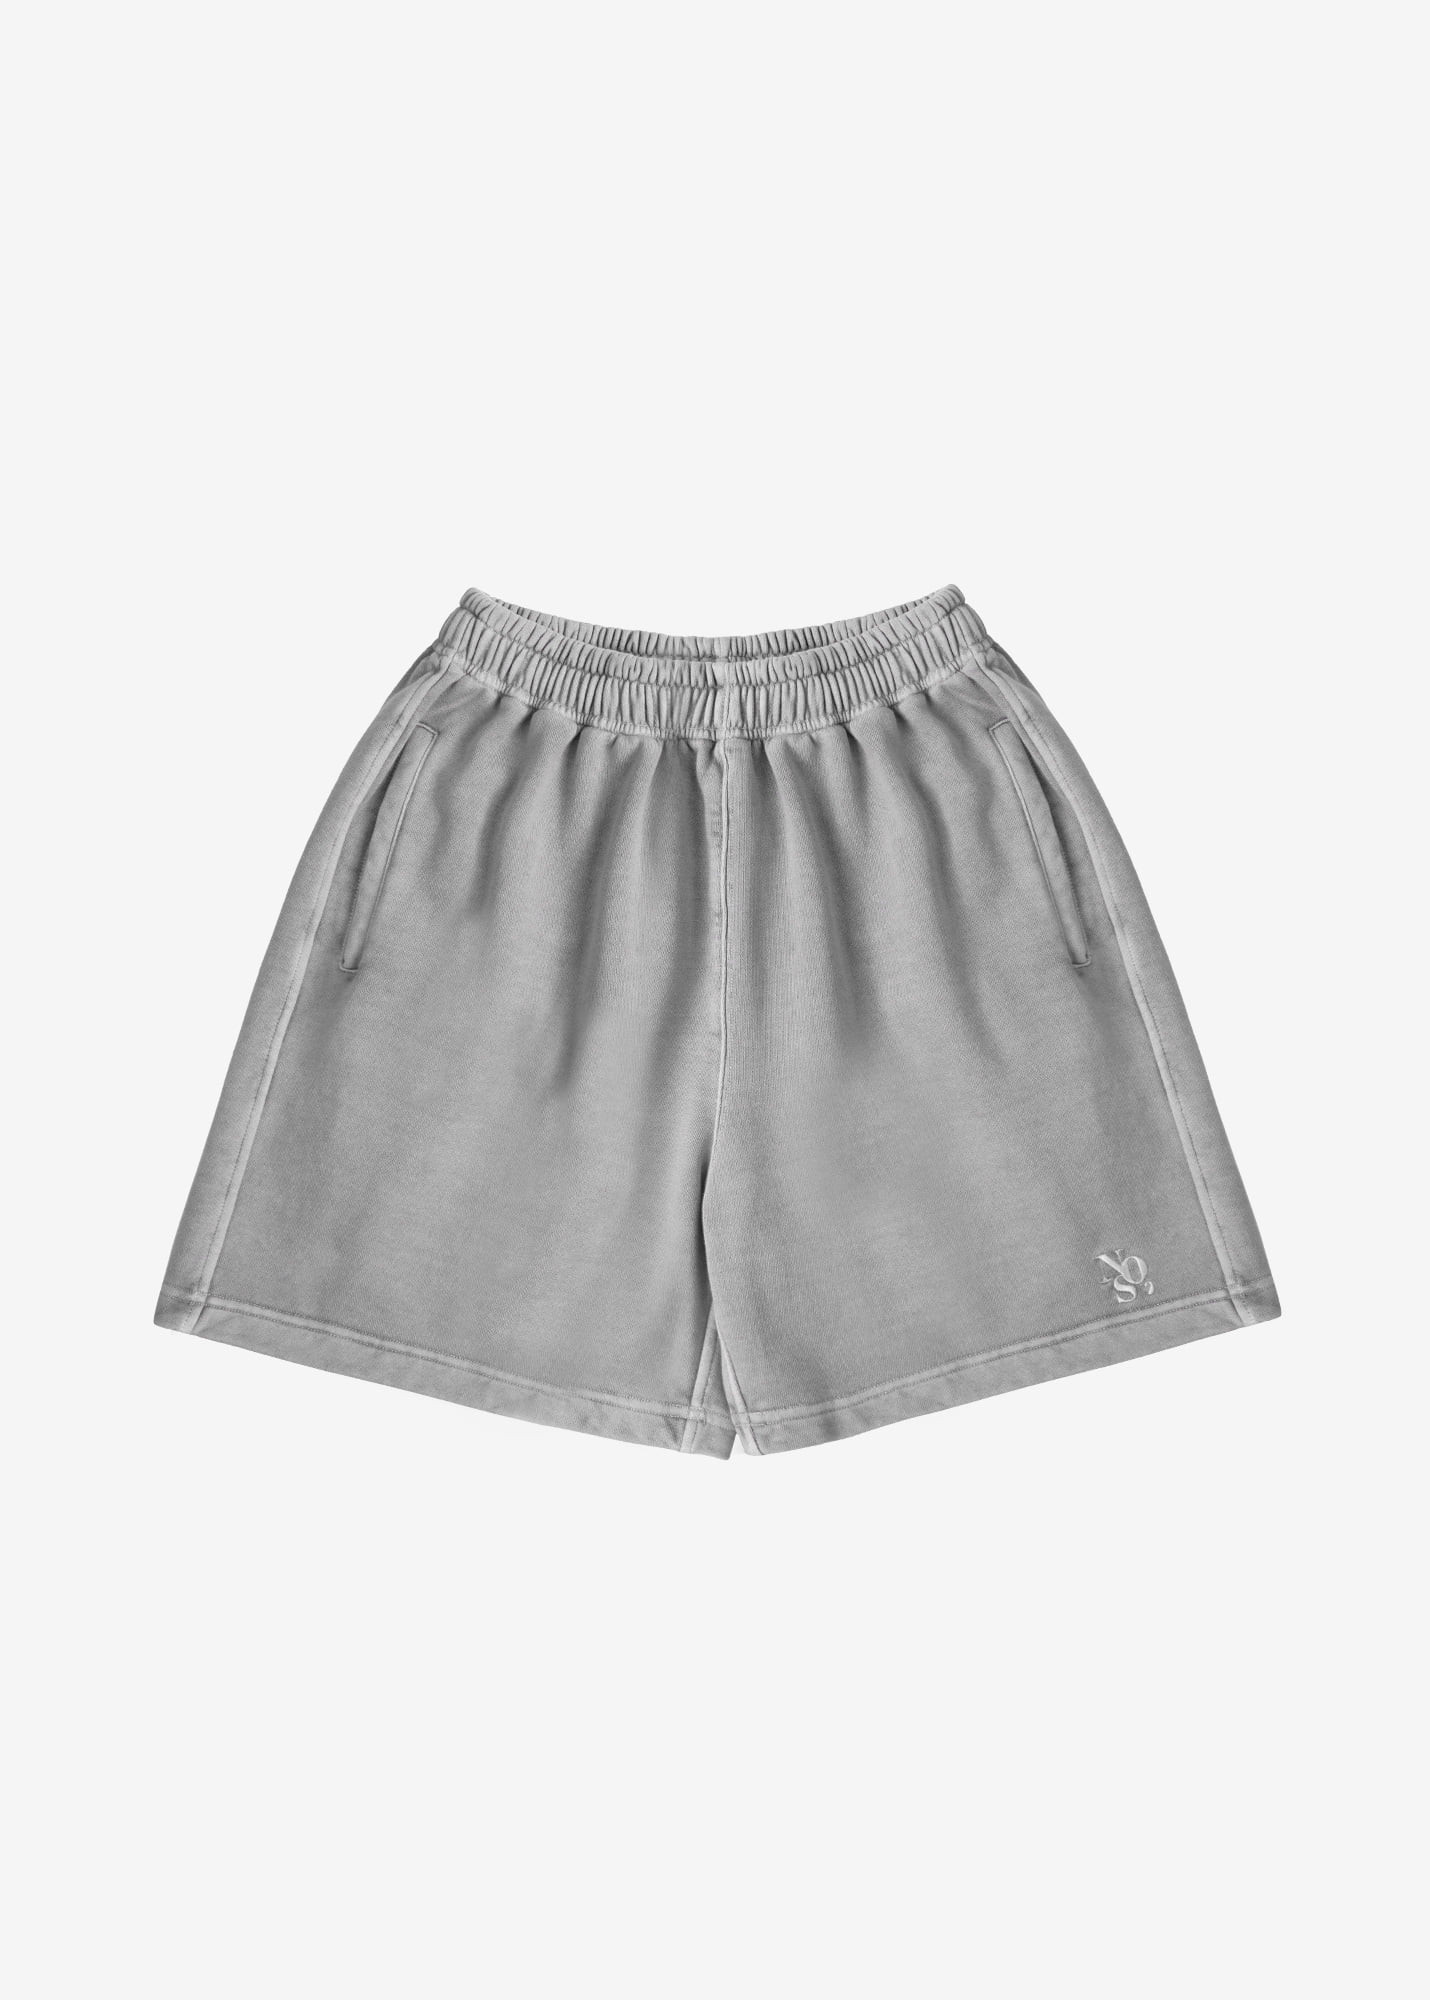 NOS7 Pigment Shorts - Light Gray